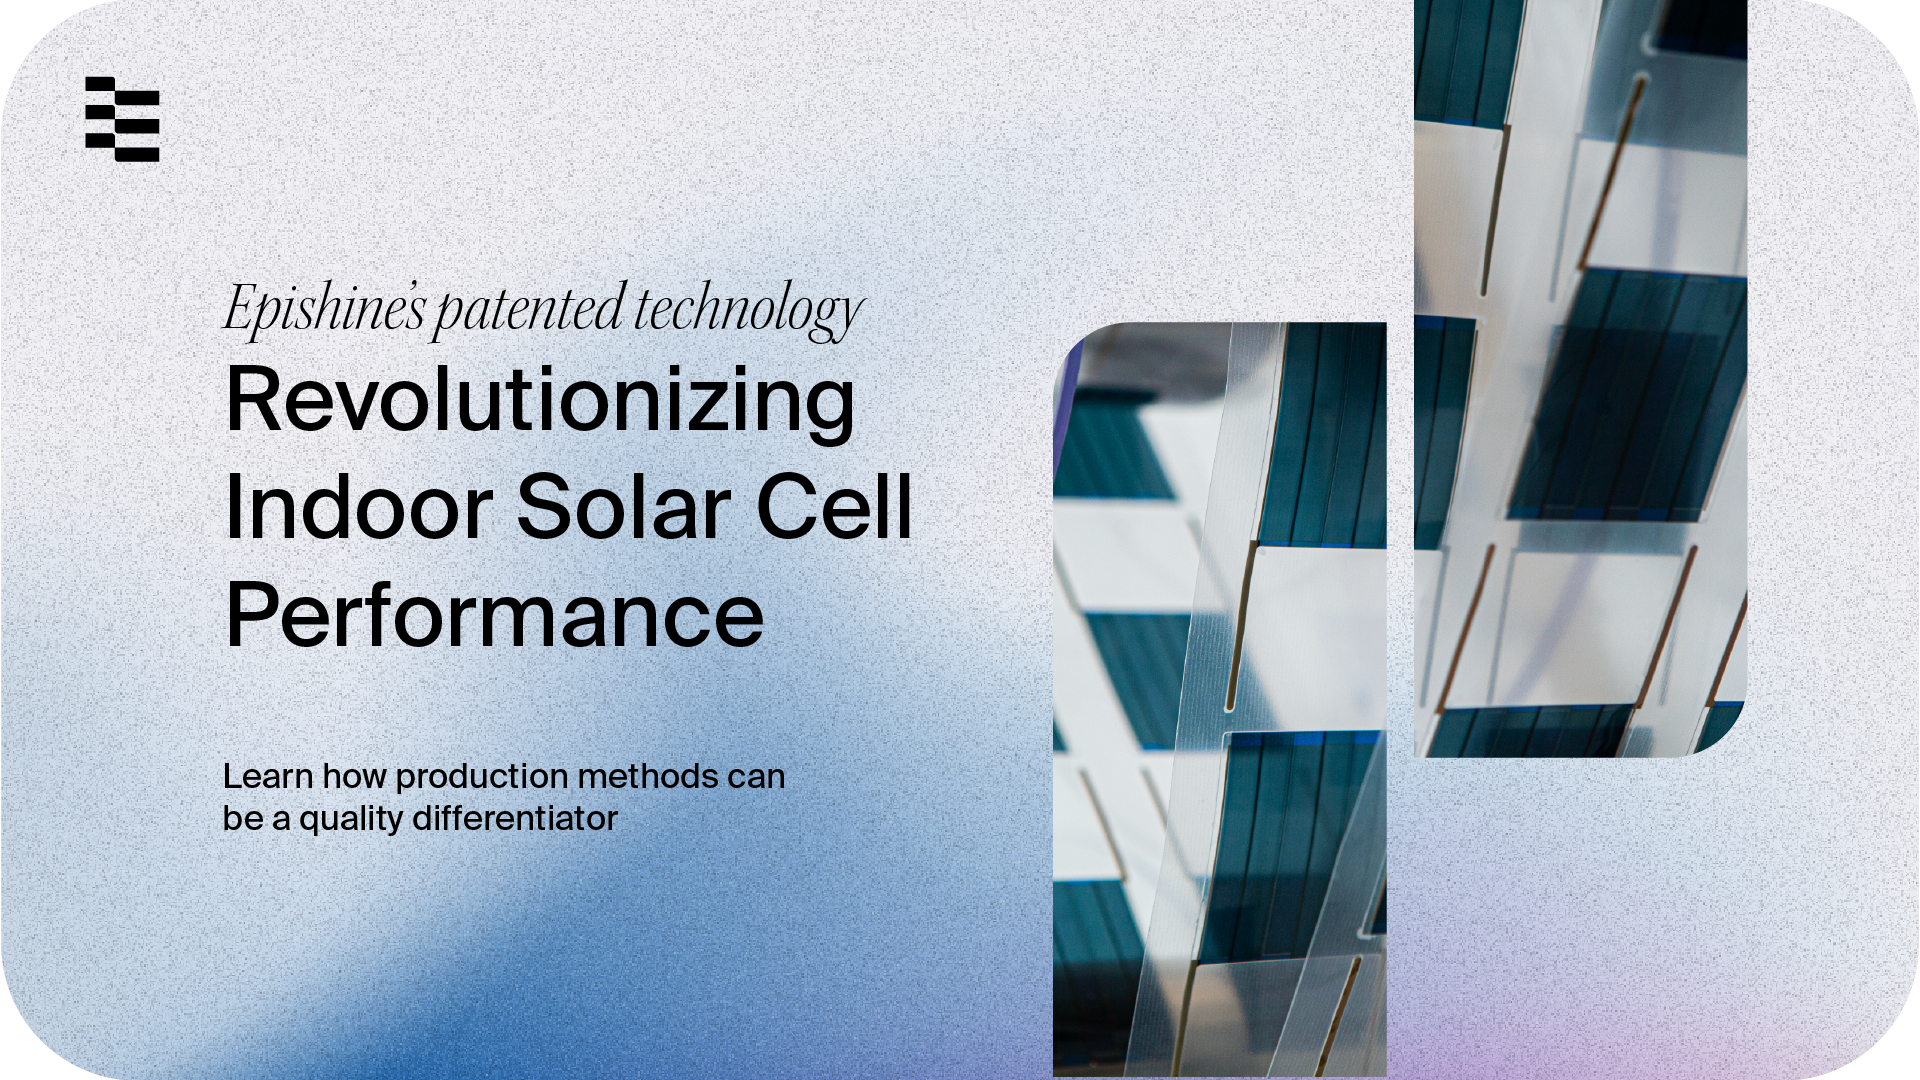 Revolutionizing indoor solar cell performance